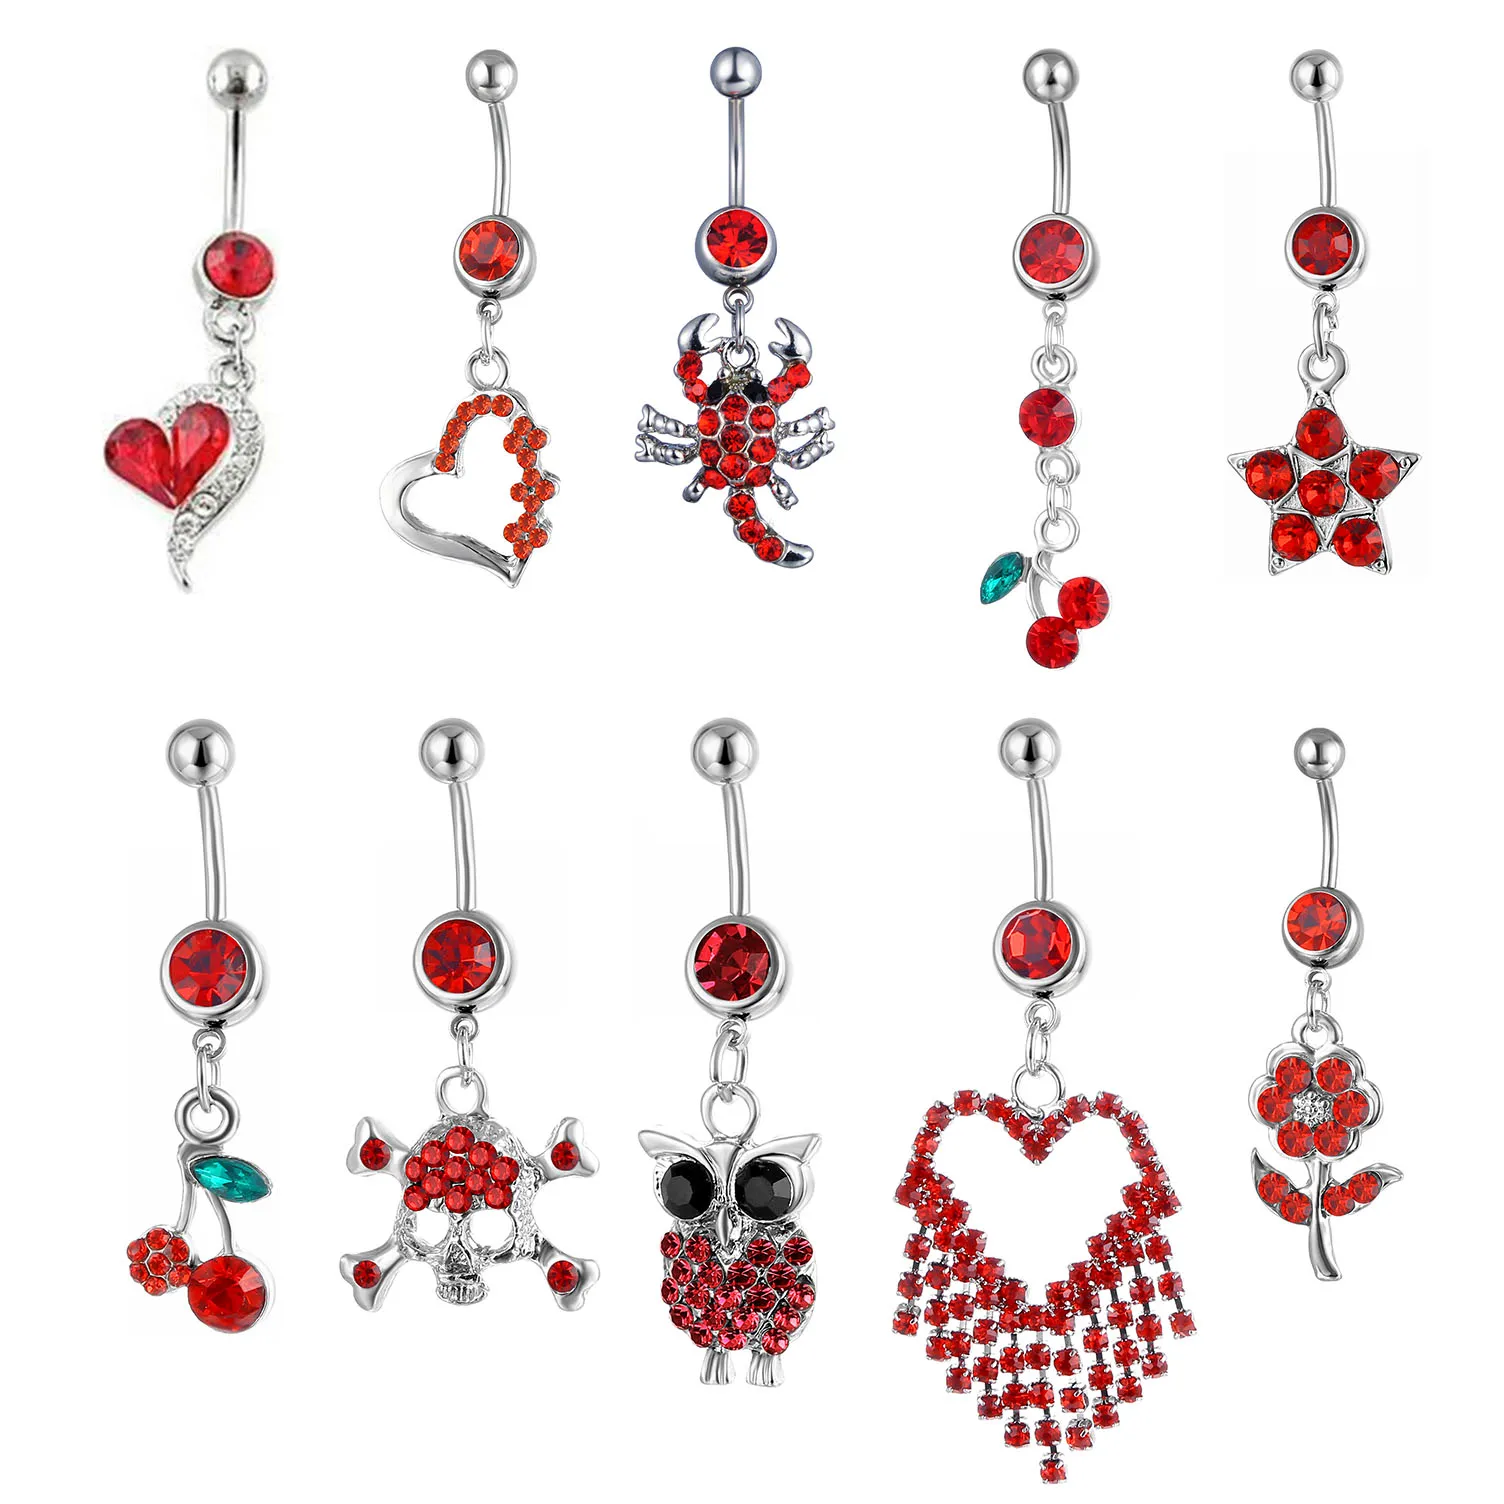 YYJFF RD10-001 Belly Navel Button Ring Mix 10 Styles Aqua.Colors 10 PCS Heart Skull Cherry Owl Flower